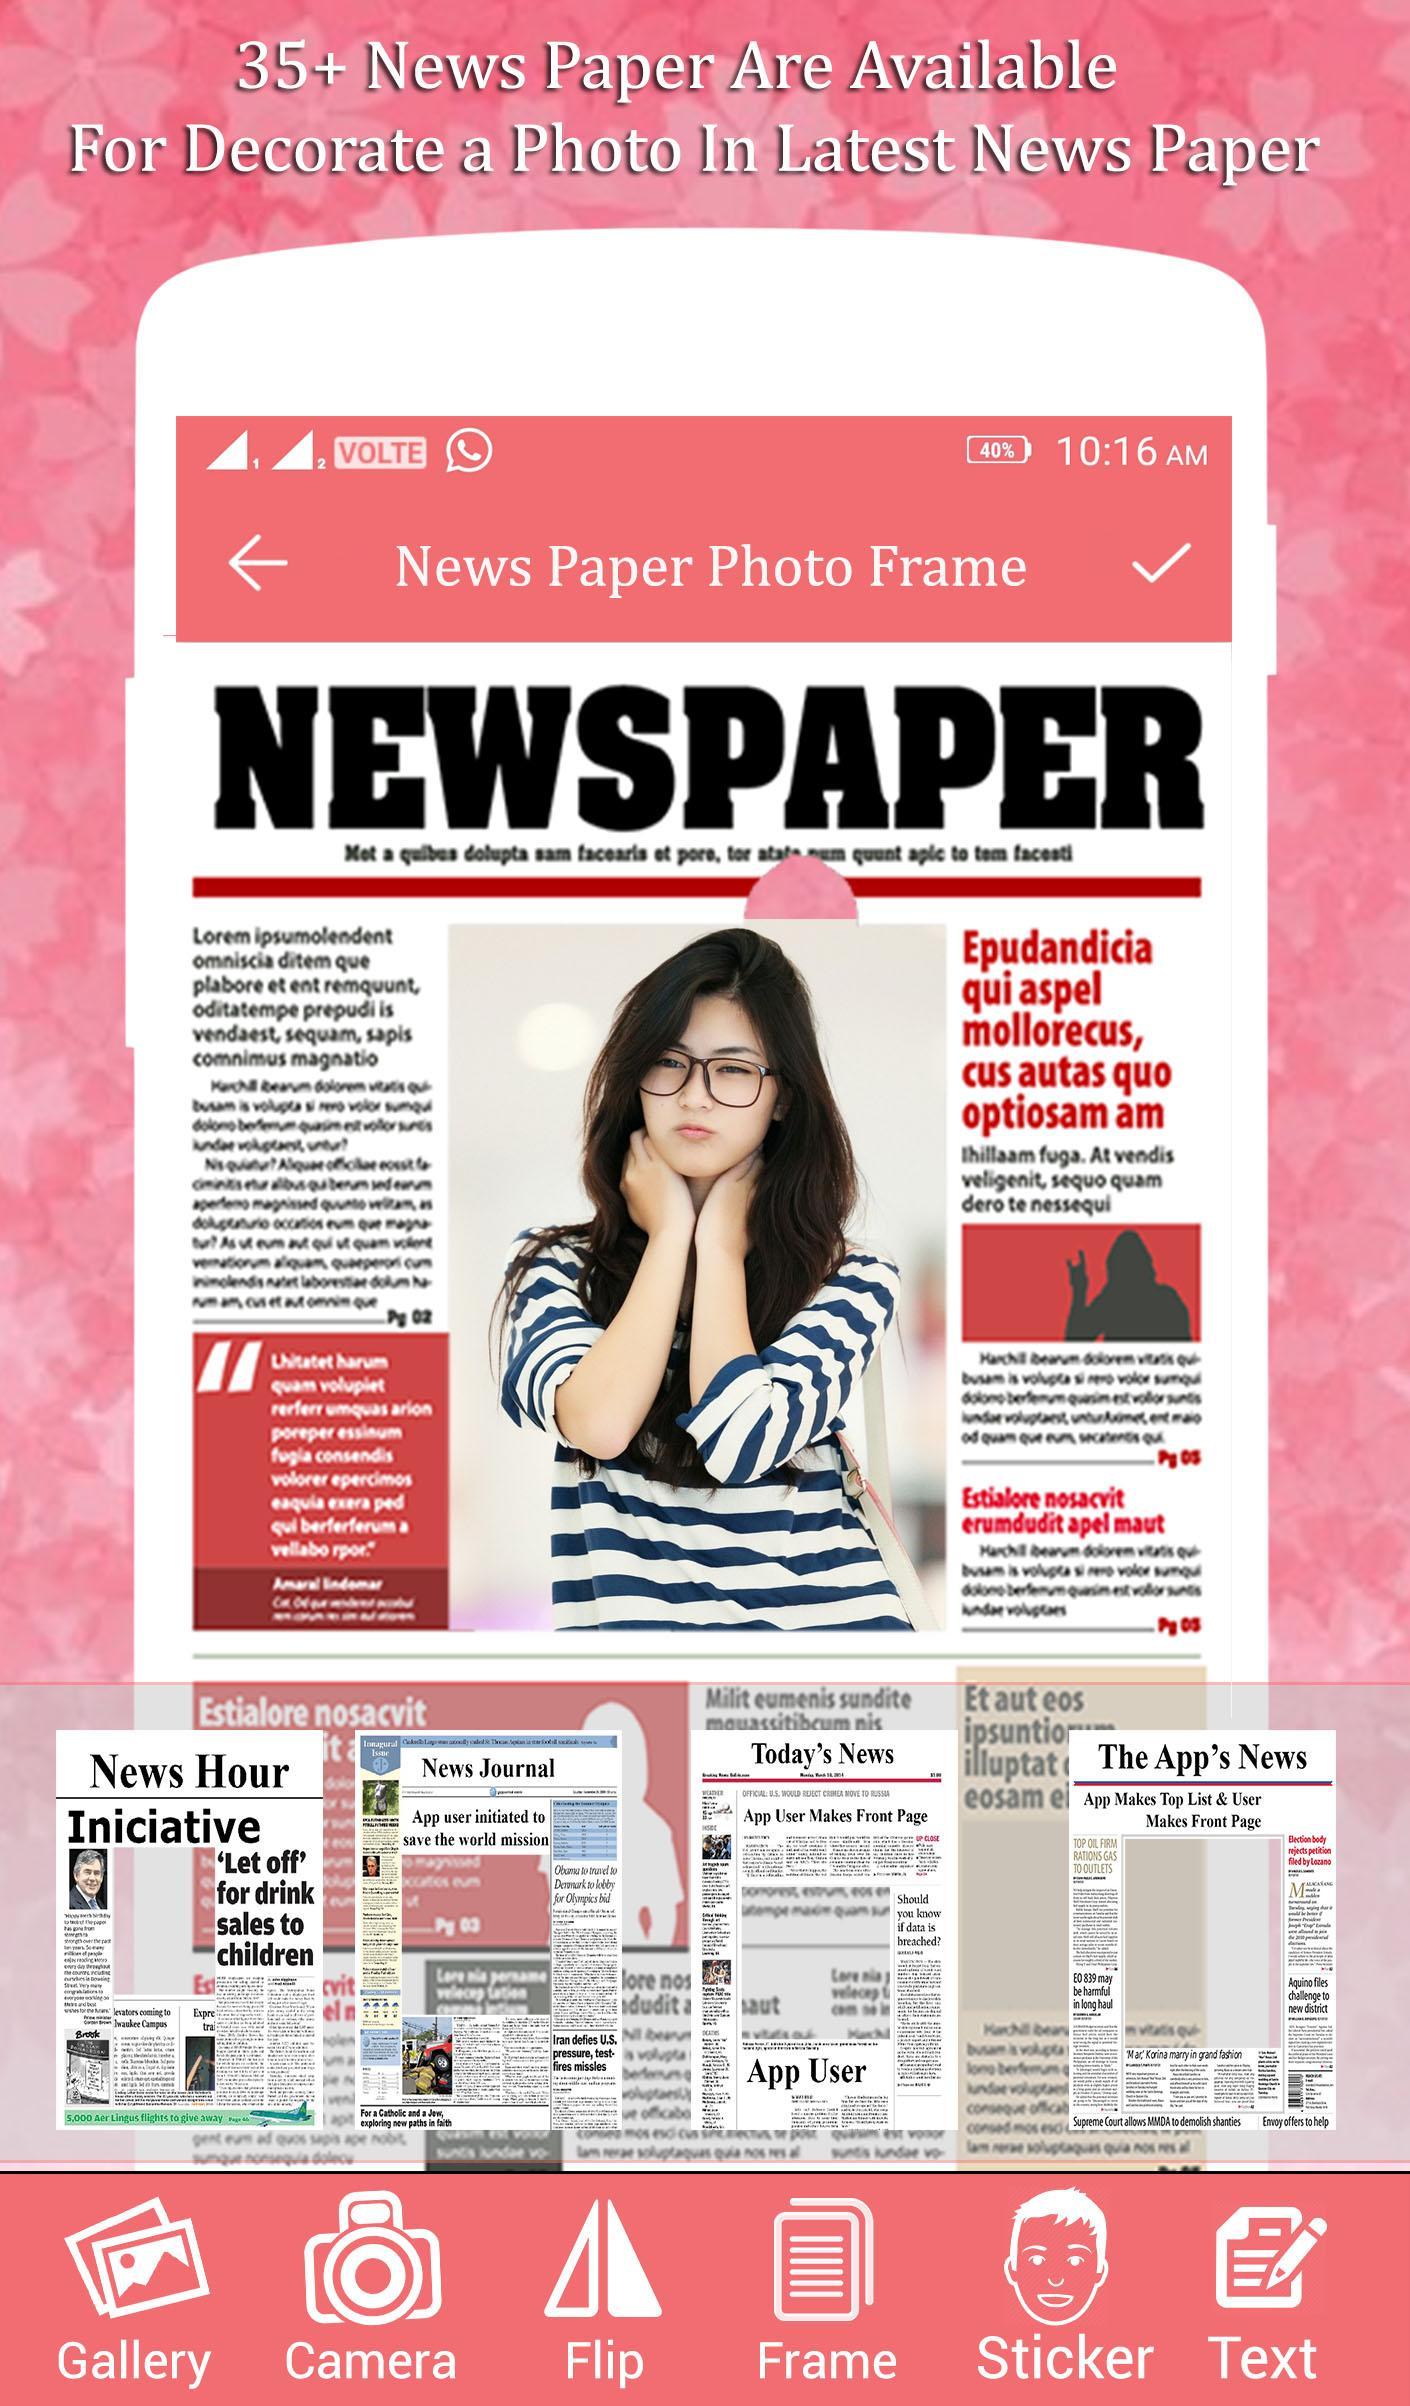 News Paper Photo Frame